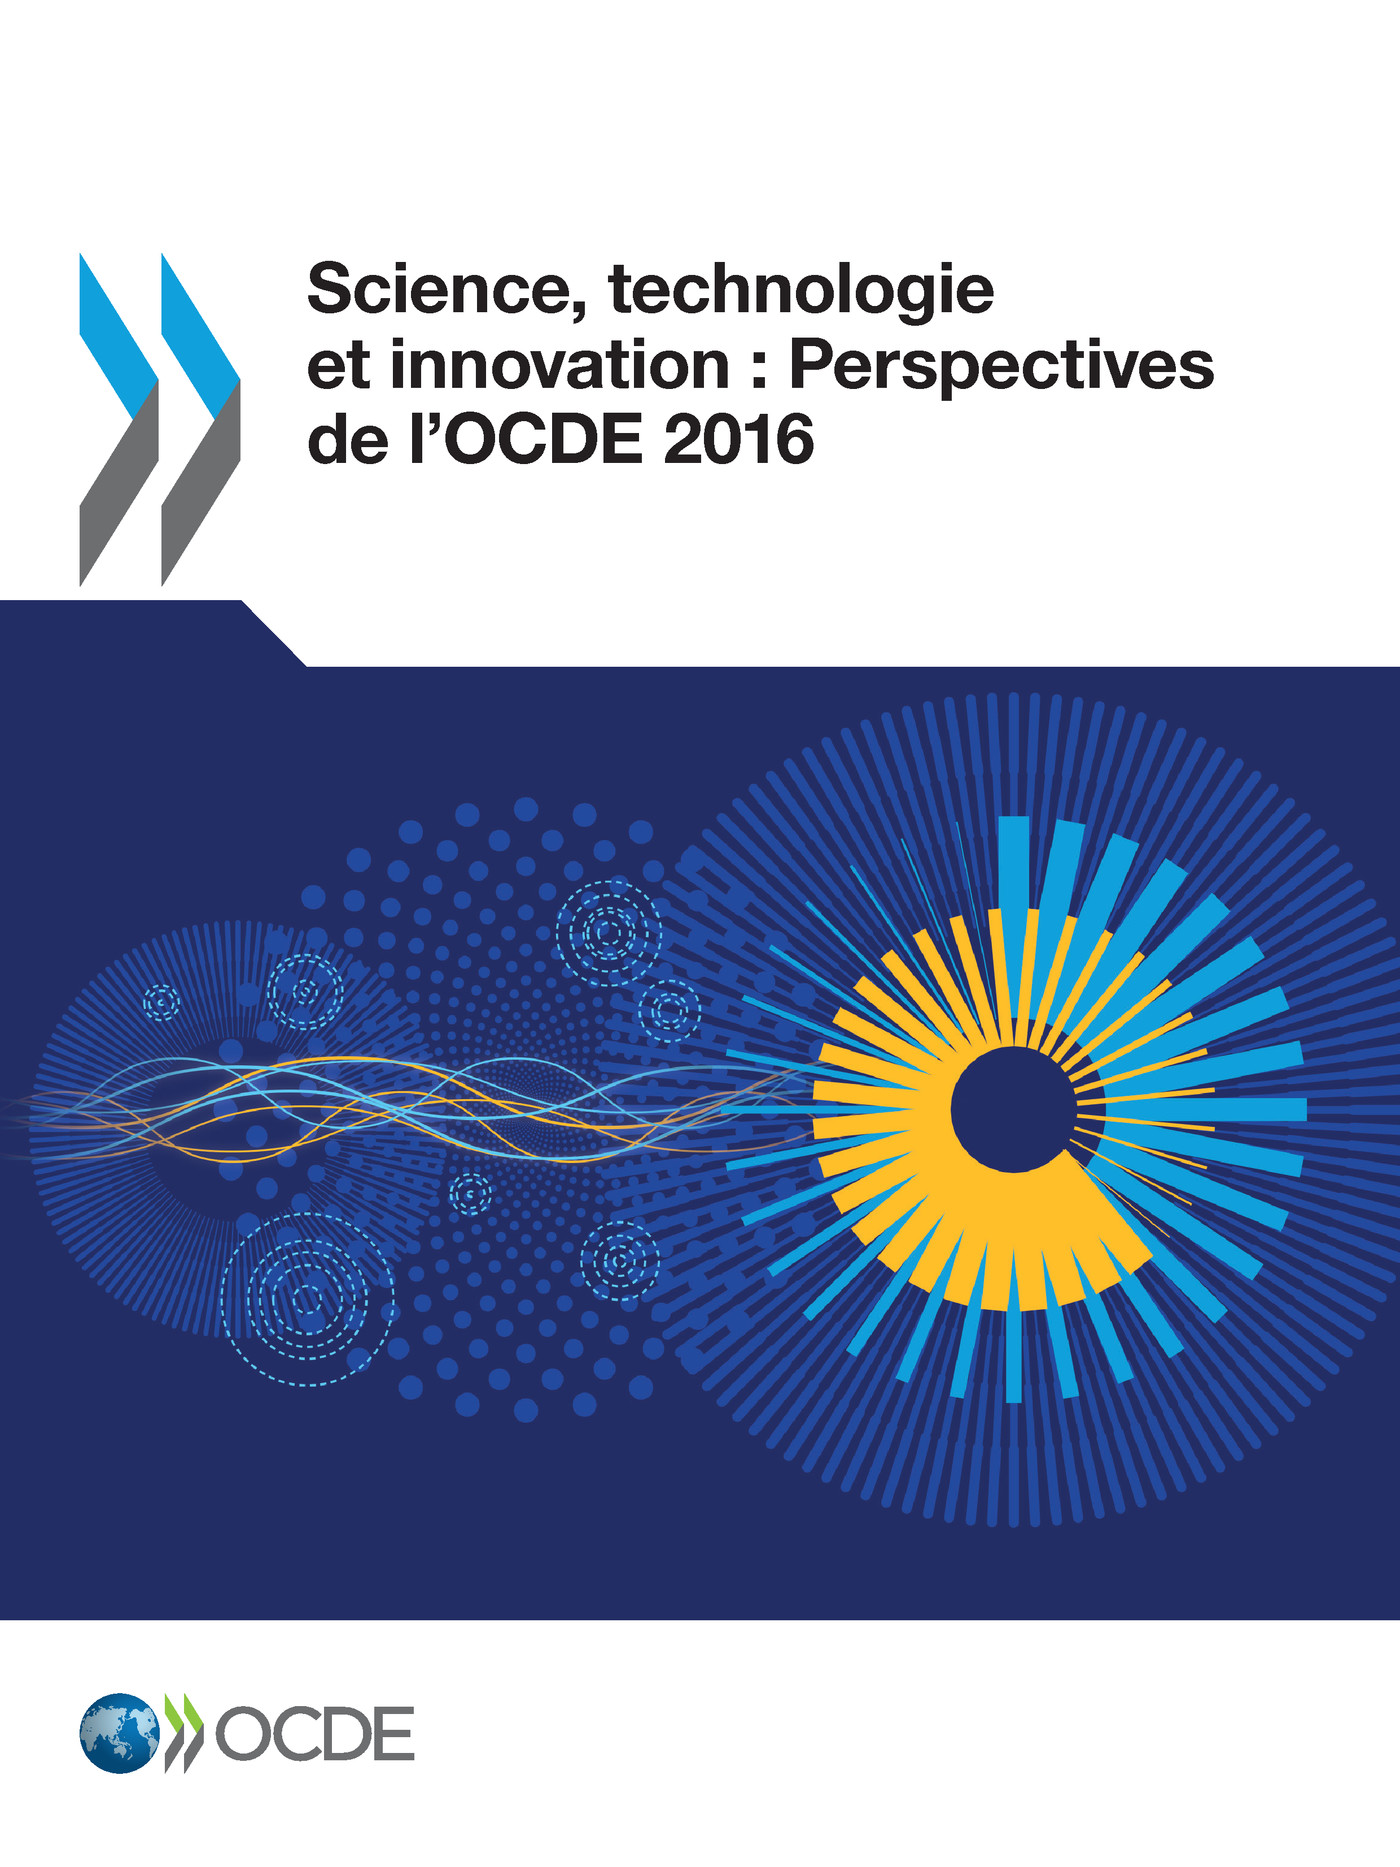 Science, technologie et innovation : Perspectives de l'OCDE 2016 -  Collectif - OCDE / OECD